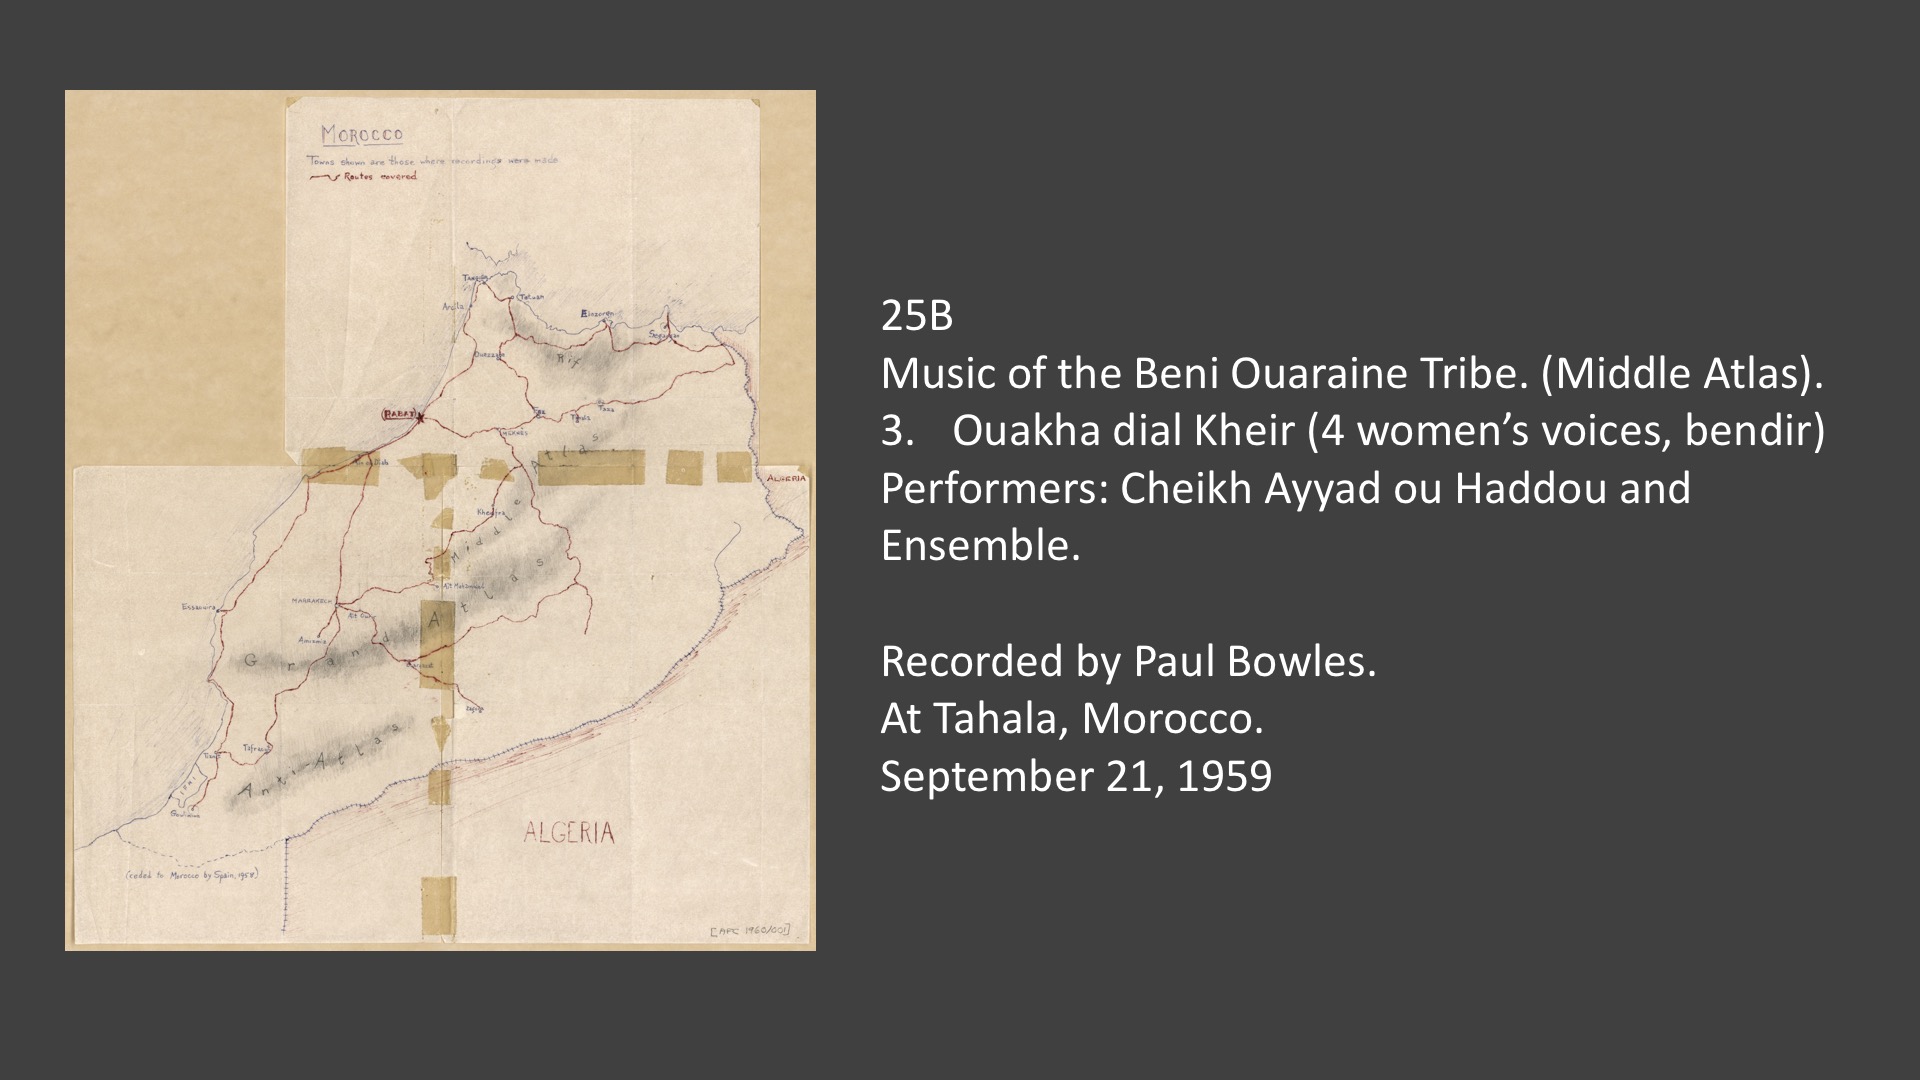 25B Music of the Beni Ouaraine Tribe. (Middle Atlas).
3. Ouakha dial Kheir  (4 women's voices, bendir). Performers: Cheikh Ayyad ou Haddou and Ensemble.